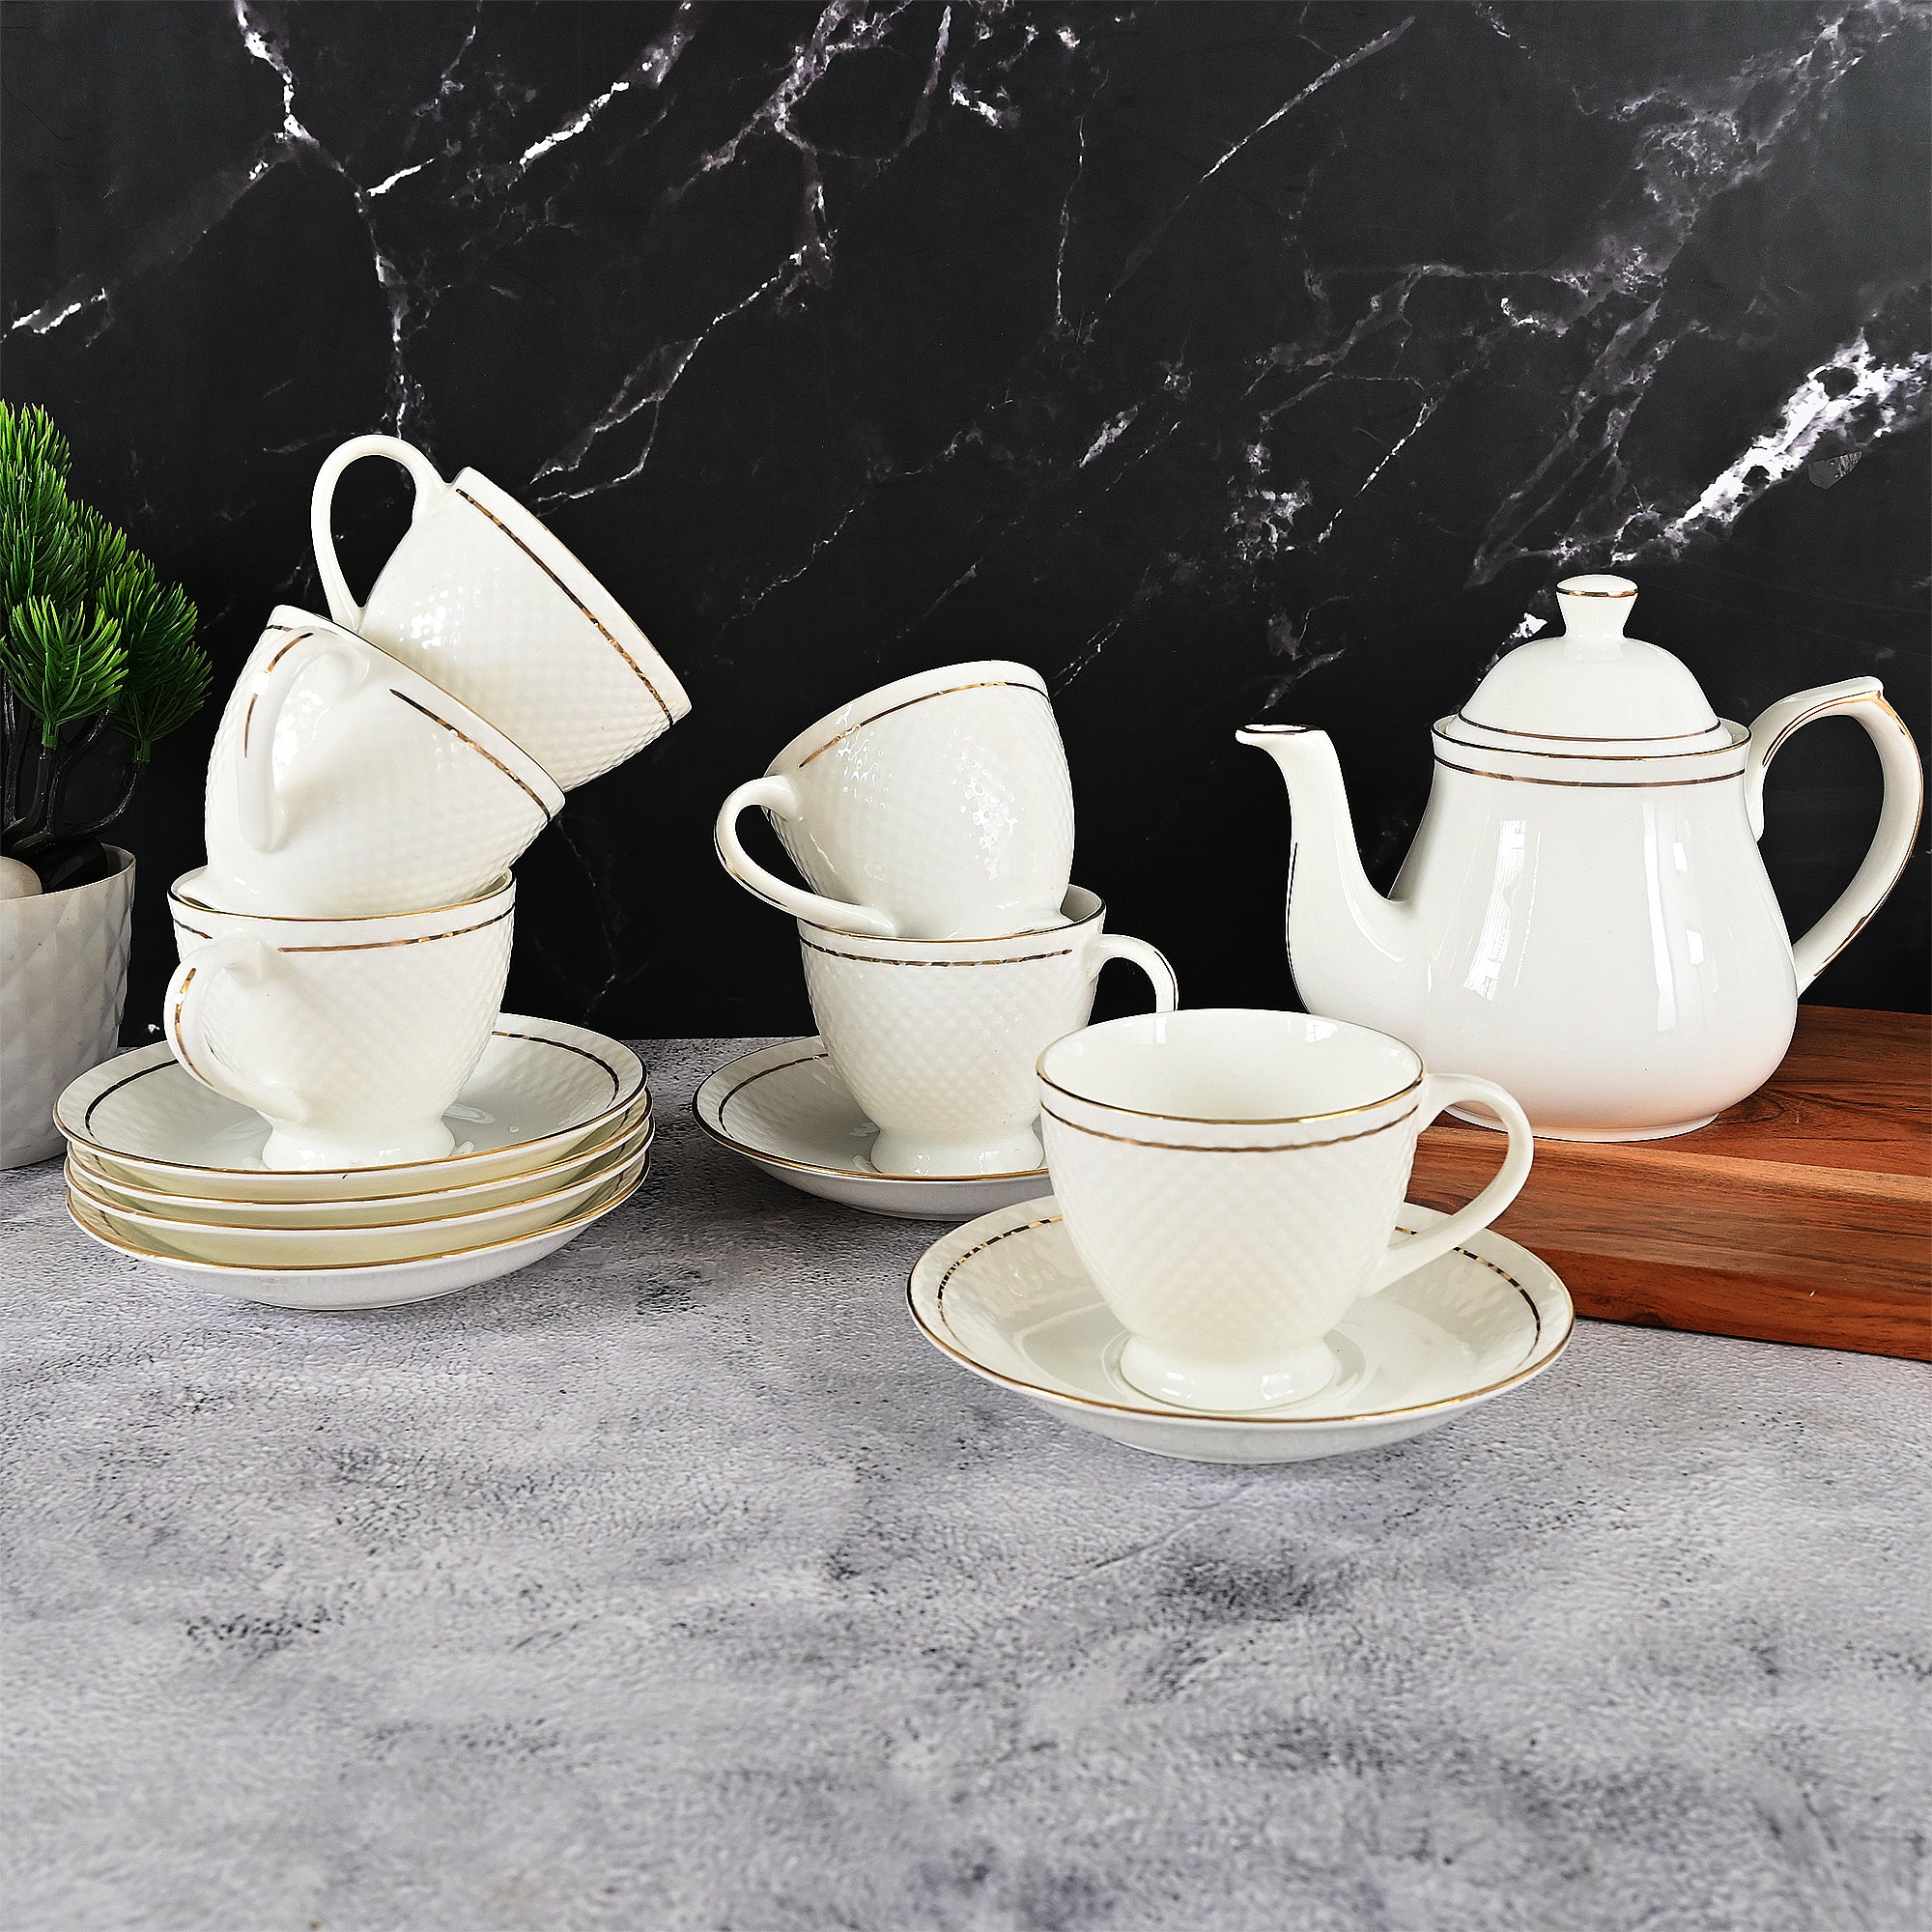 Femora Ceramic Gold Line Diamond Cut White Tea Cups & Saucer Tea Kettle Set -200 ml Set of 13 (6 Cups, 6 Saucer, 1 Kettle)